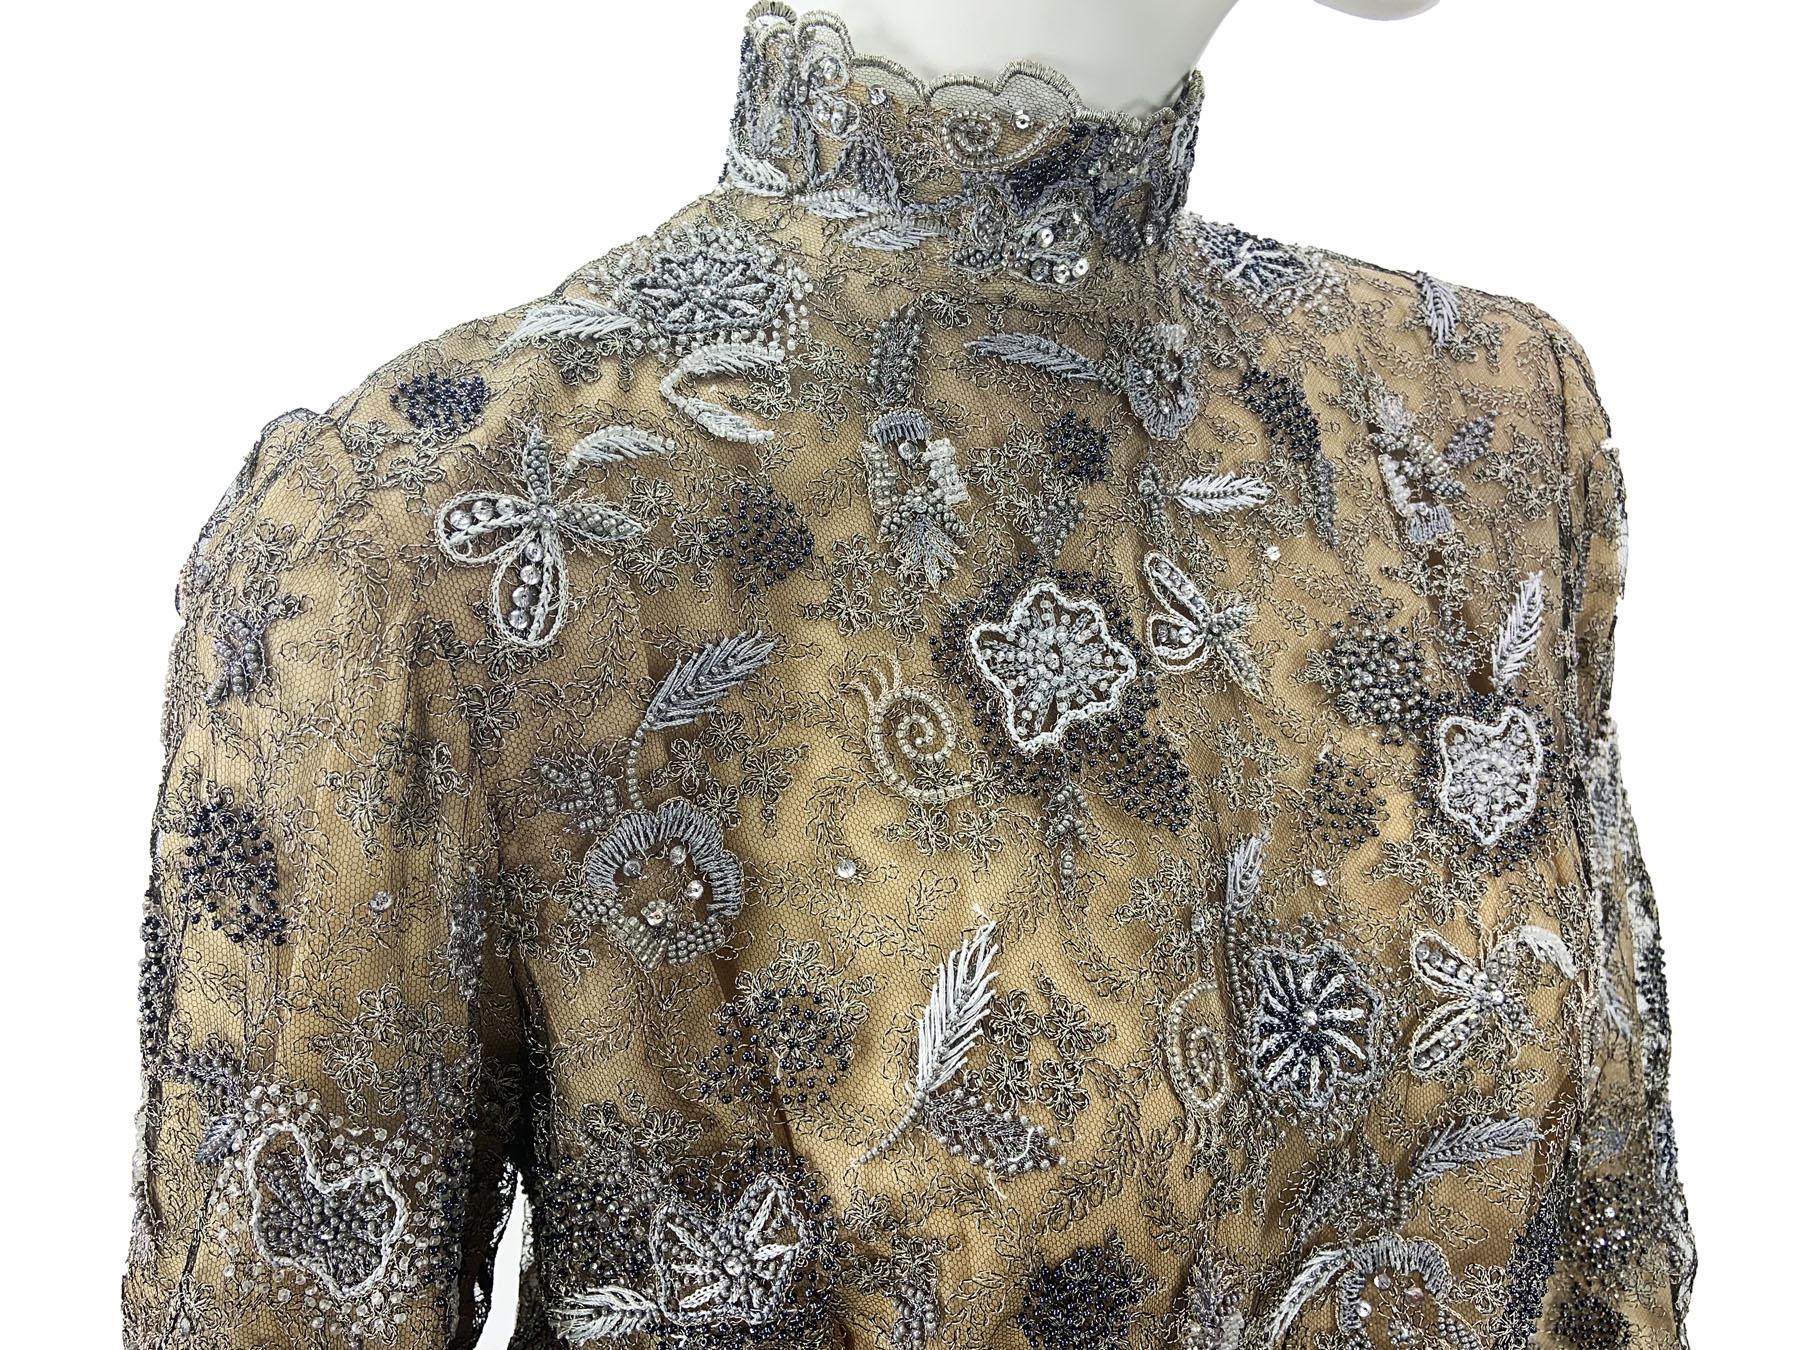 Vintage Oscar de la Renta Smoky Gray Metallic Lace Fully Embellished Dress 10 For Sale 3